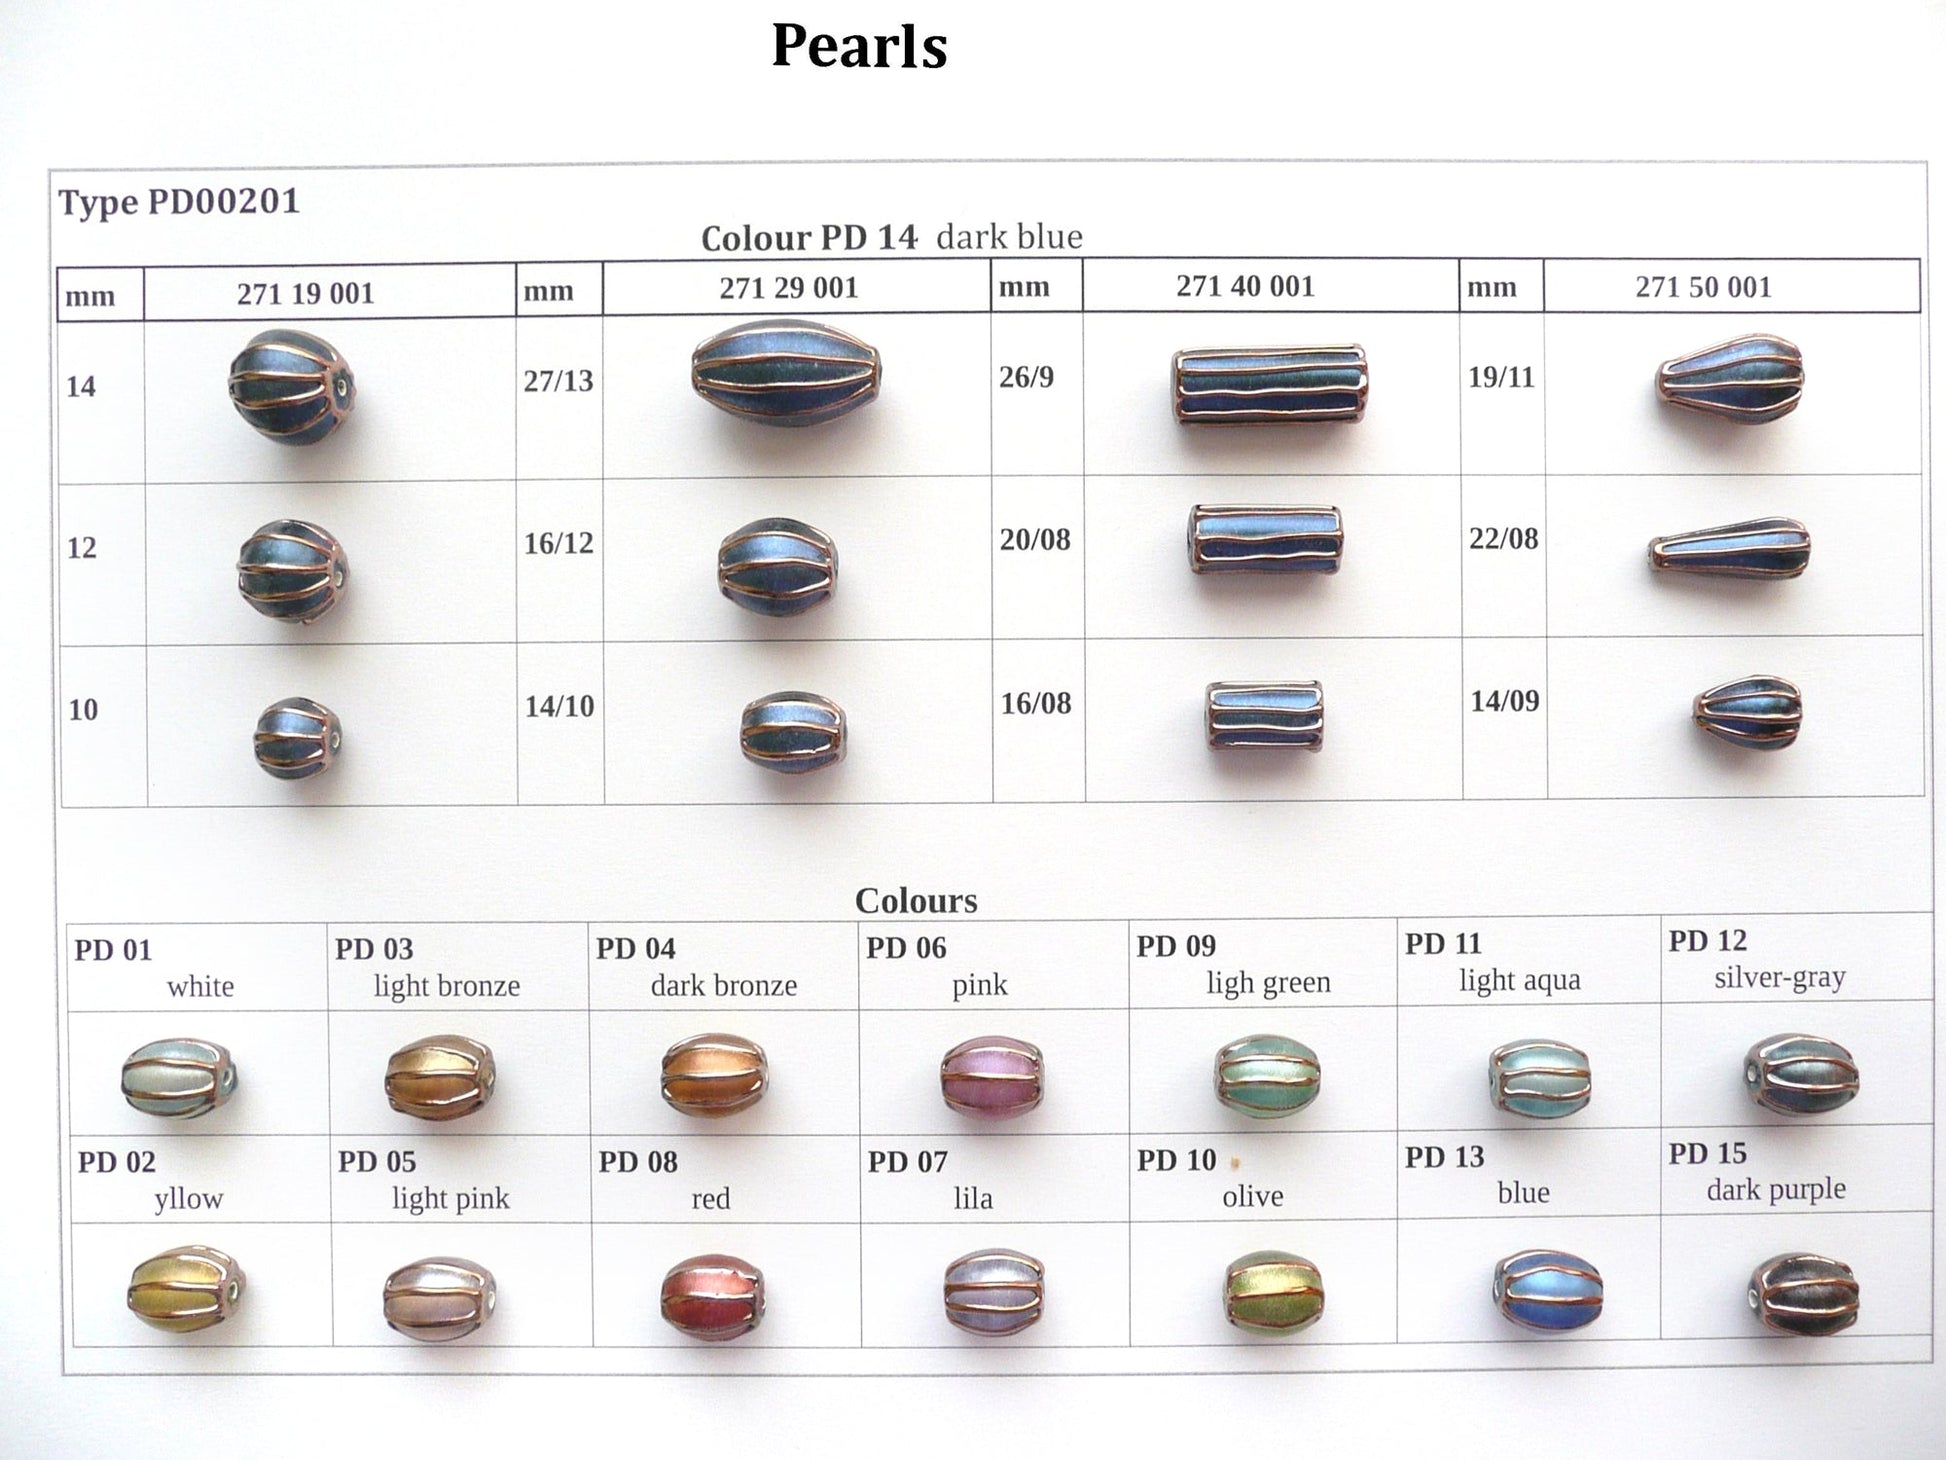 30 pcs Lampwork Beads Pearl Decor PD201 / Round (271-19-001), Handmade, Preciosa Glass, Czech Republic